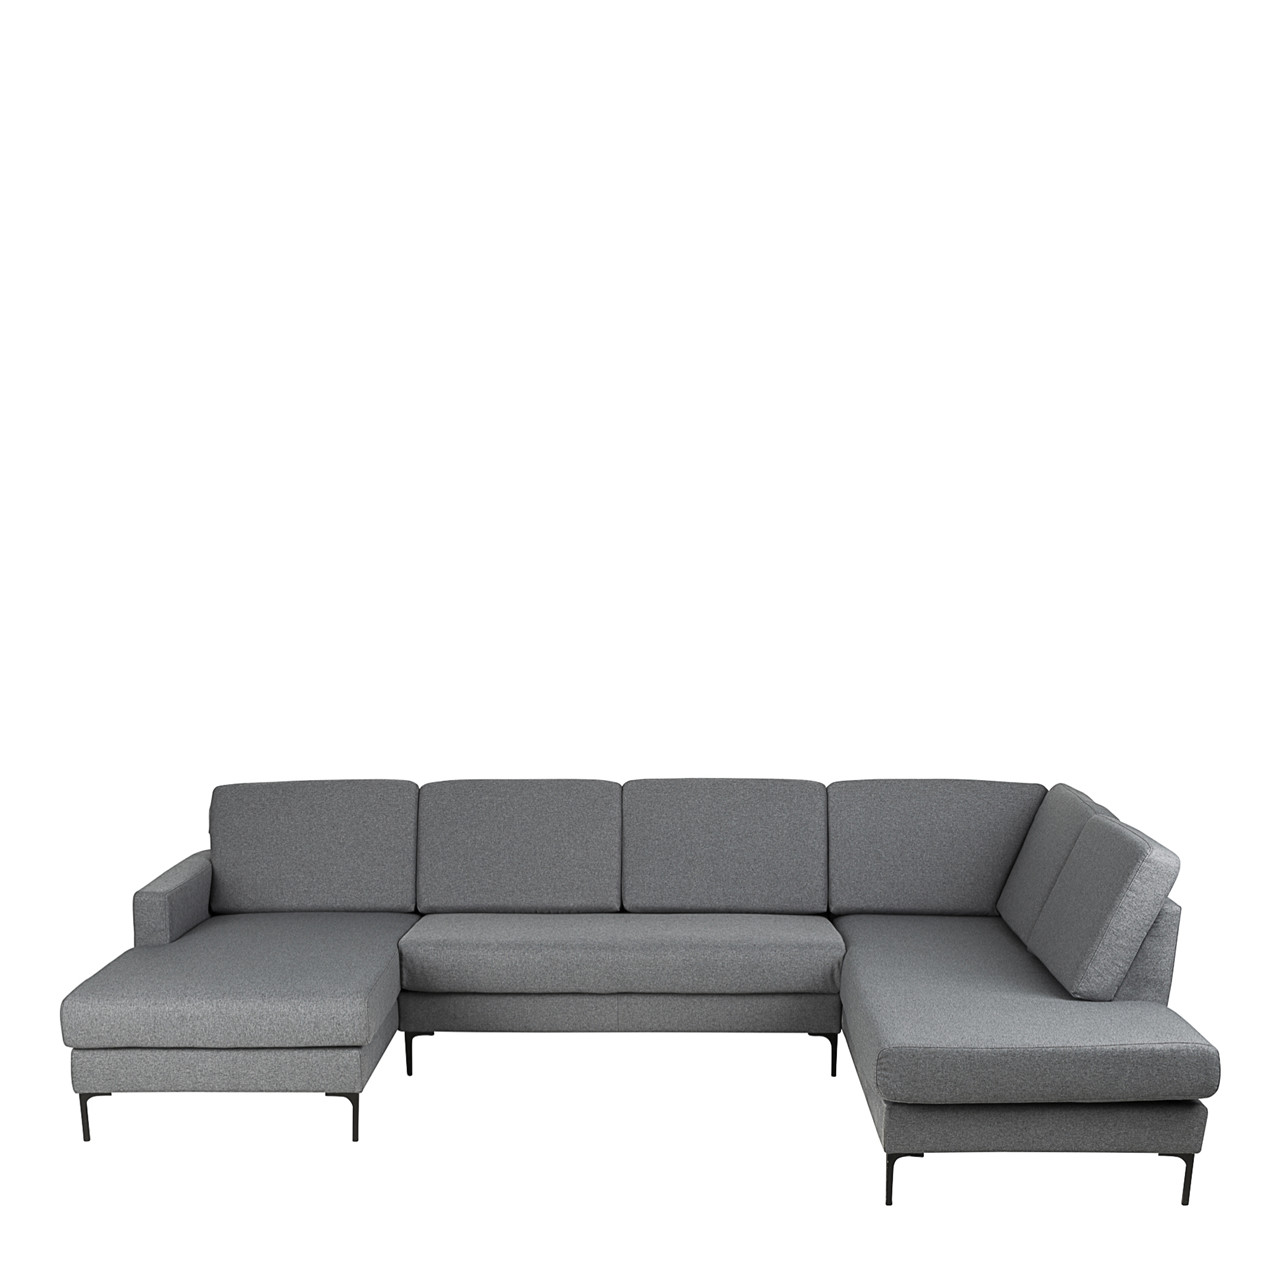 RICHMOND grå u-sofa venstrevendt // Forventes på lager til vinter